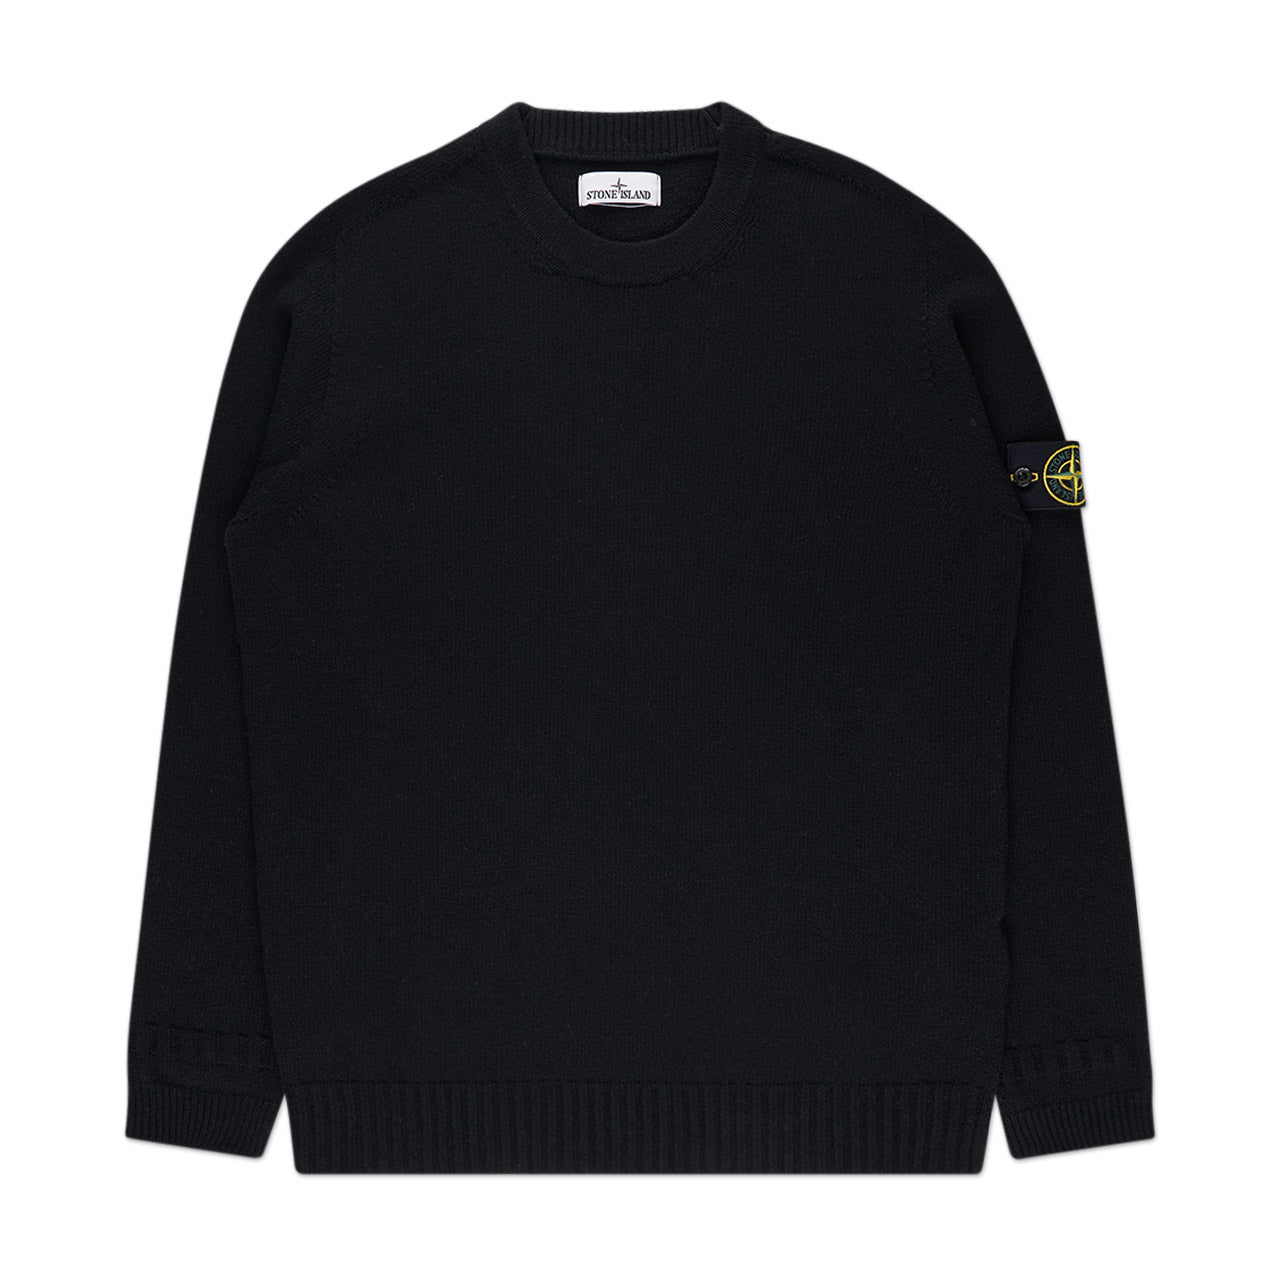 stone island knitted sweatshirt (black)